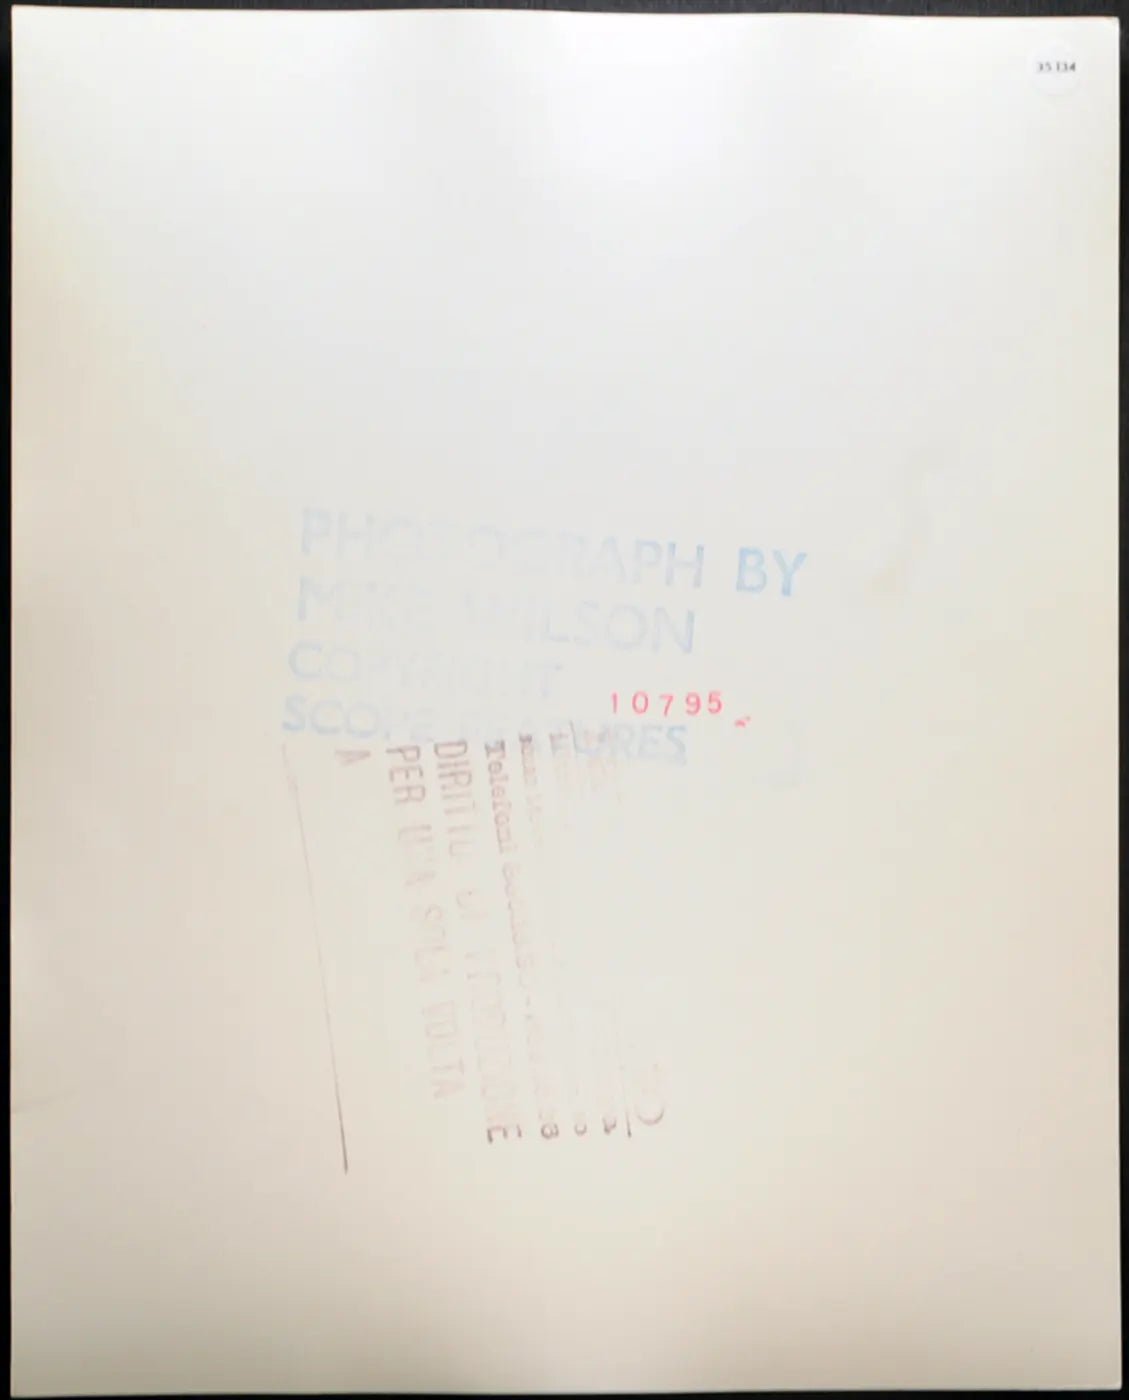 Joni Flynn Modella anni 70 Ft 35134 - Stampa 20x25 cm - Farabola Stampa ai sali d'argento